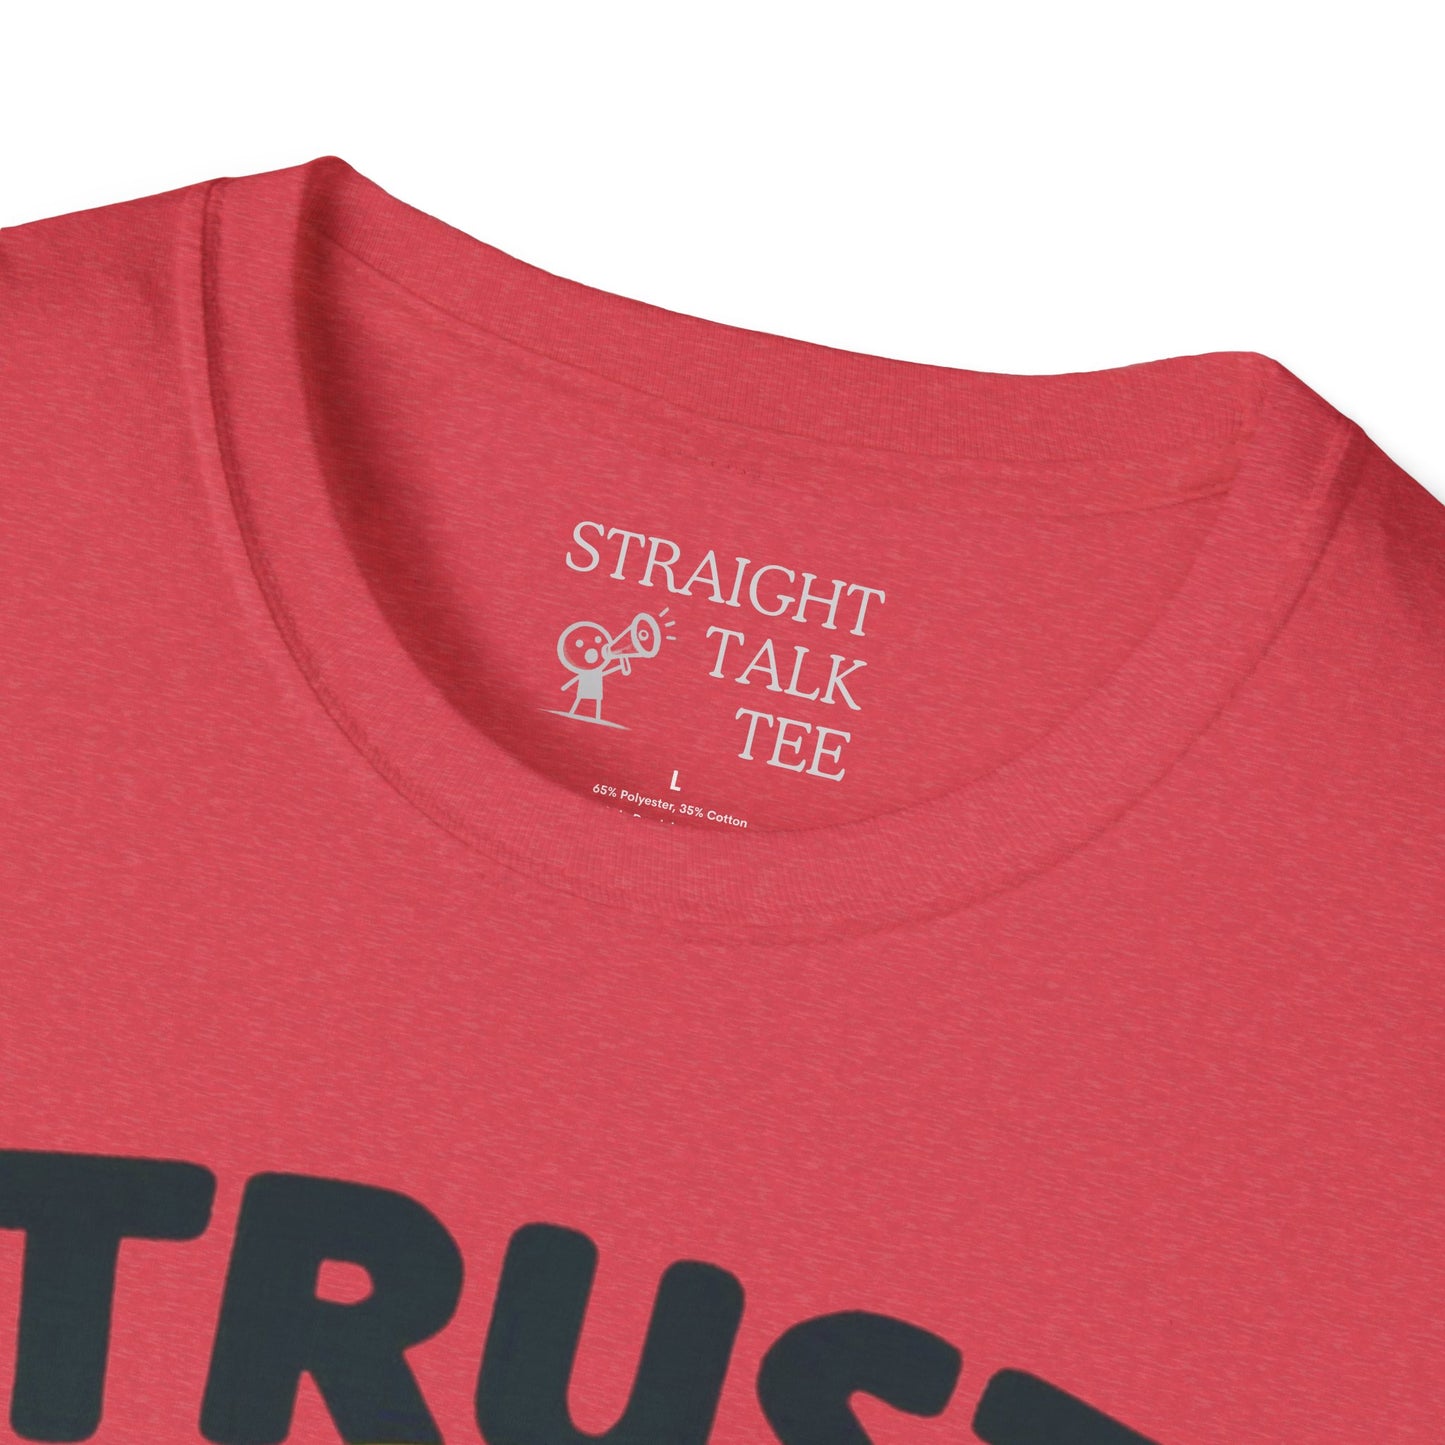 Trust Women! Bold Uncompromising Statement Soft Style t-shirt |unisex| Modern Art Activism Tee Shirt, Show You Care! Protest & Activism!